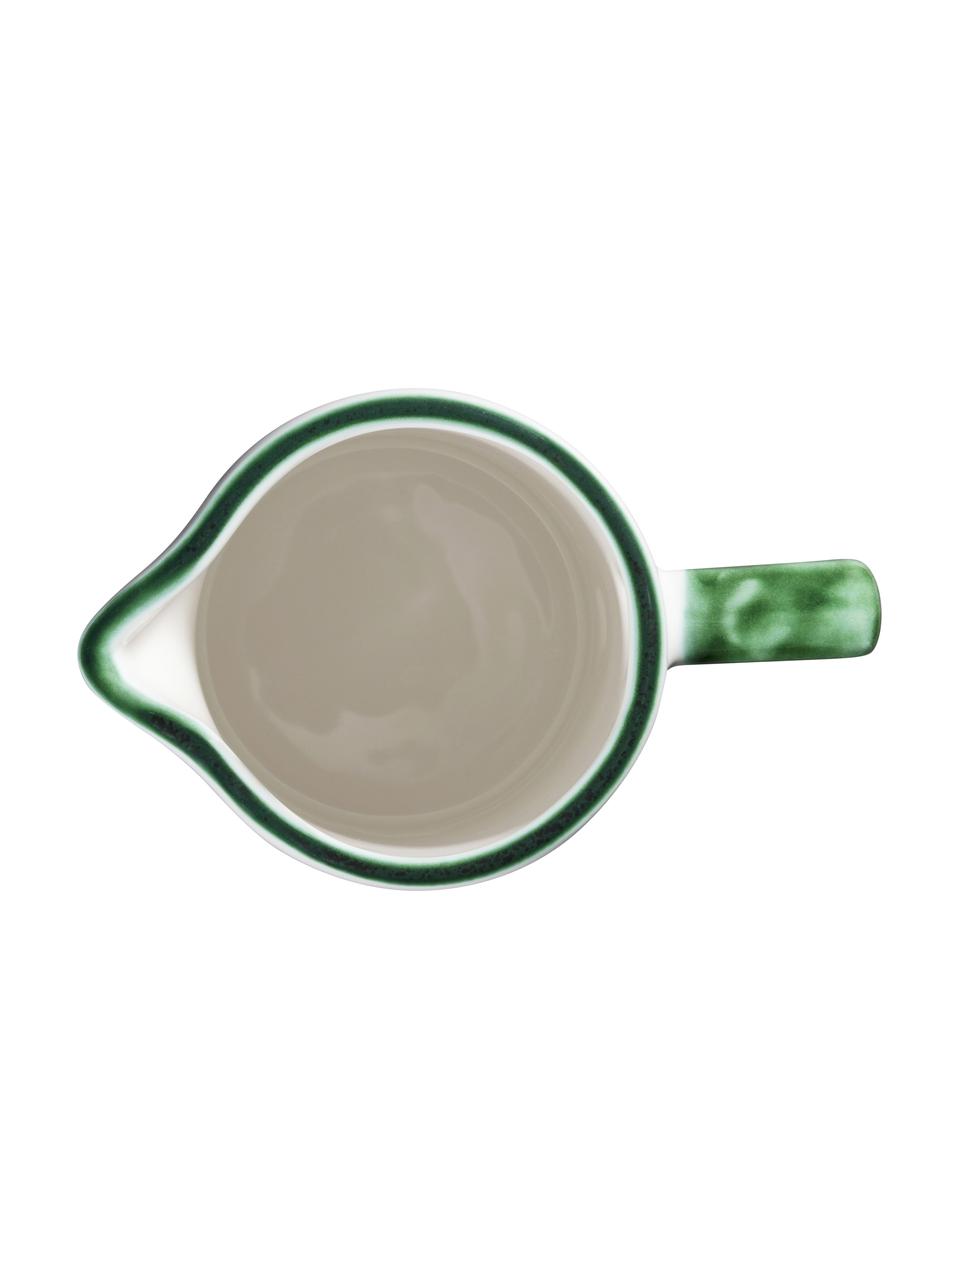 Ručně vyrobený džbánek na vodu Grüner Hirsch, Keramika, Bílá, zelená, 0,7 l